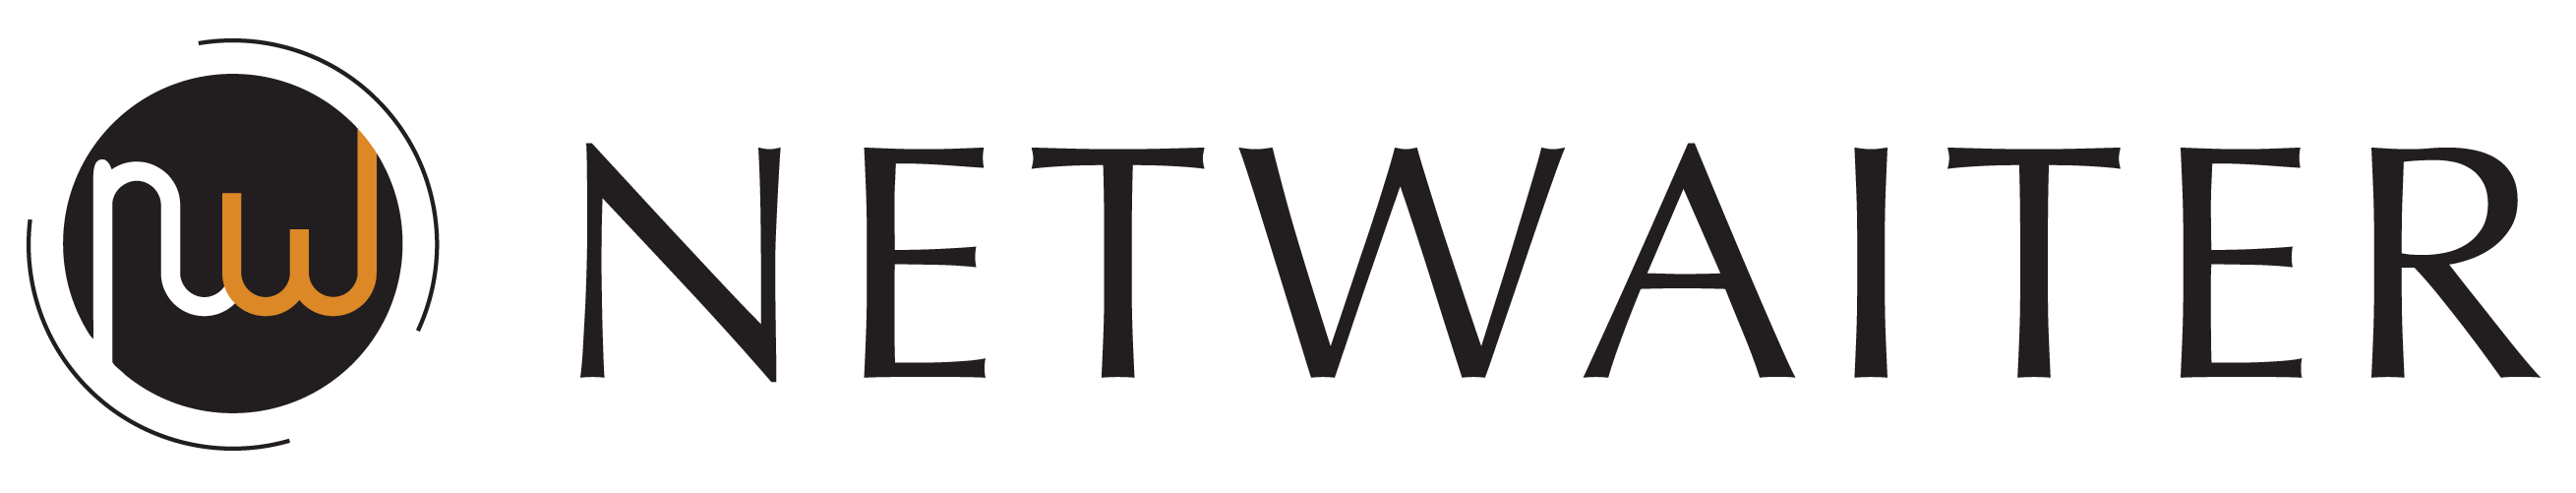 NetWaiter Logo